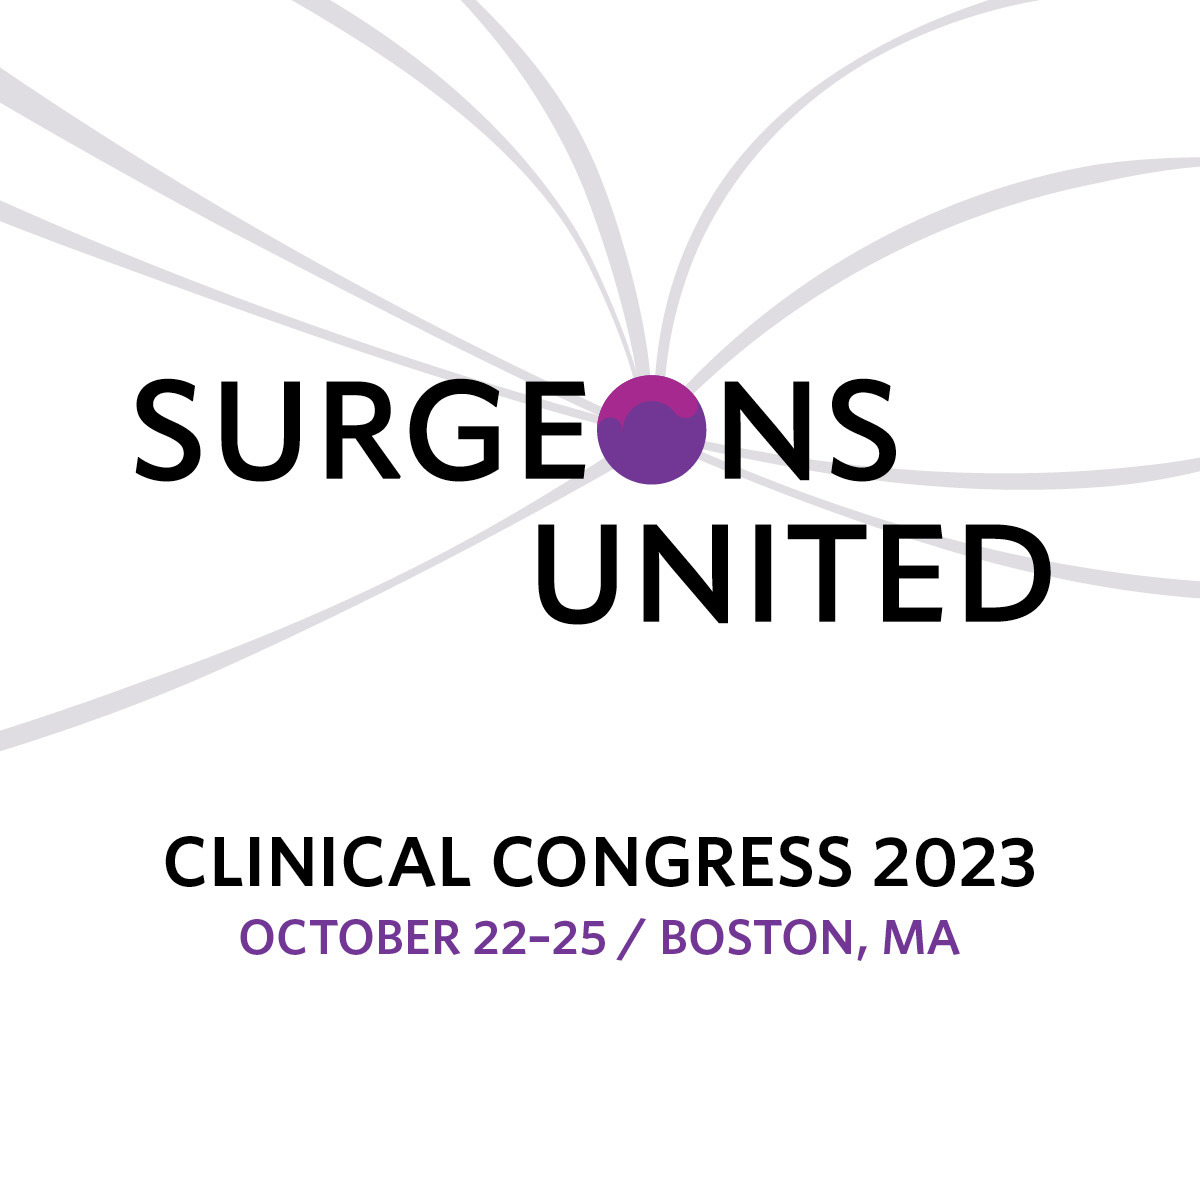 Clinical Congress 2023